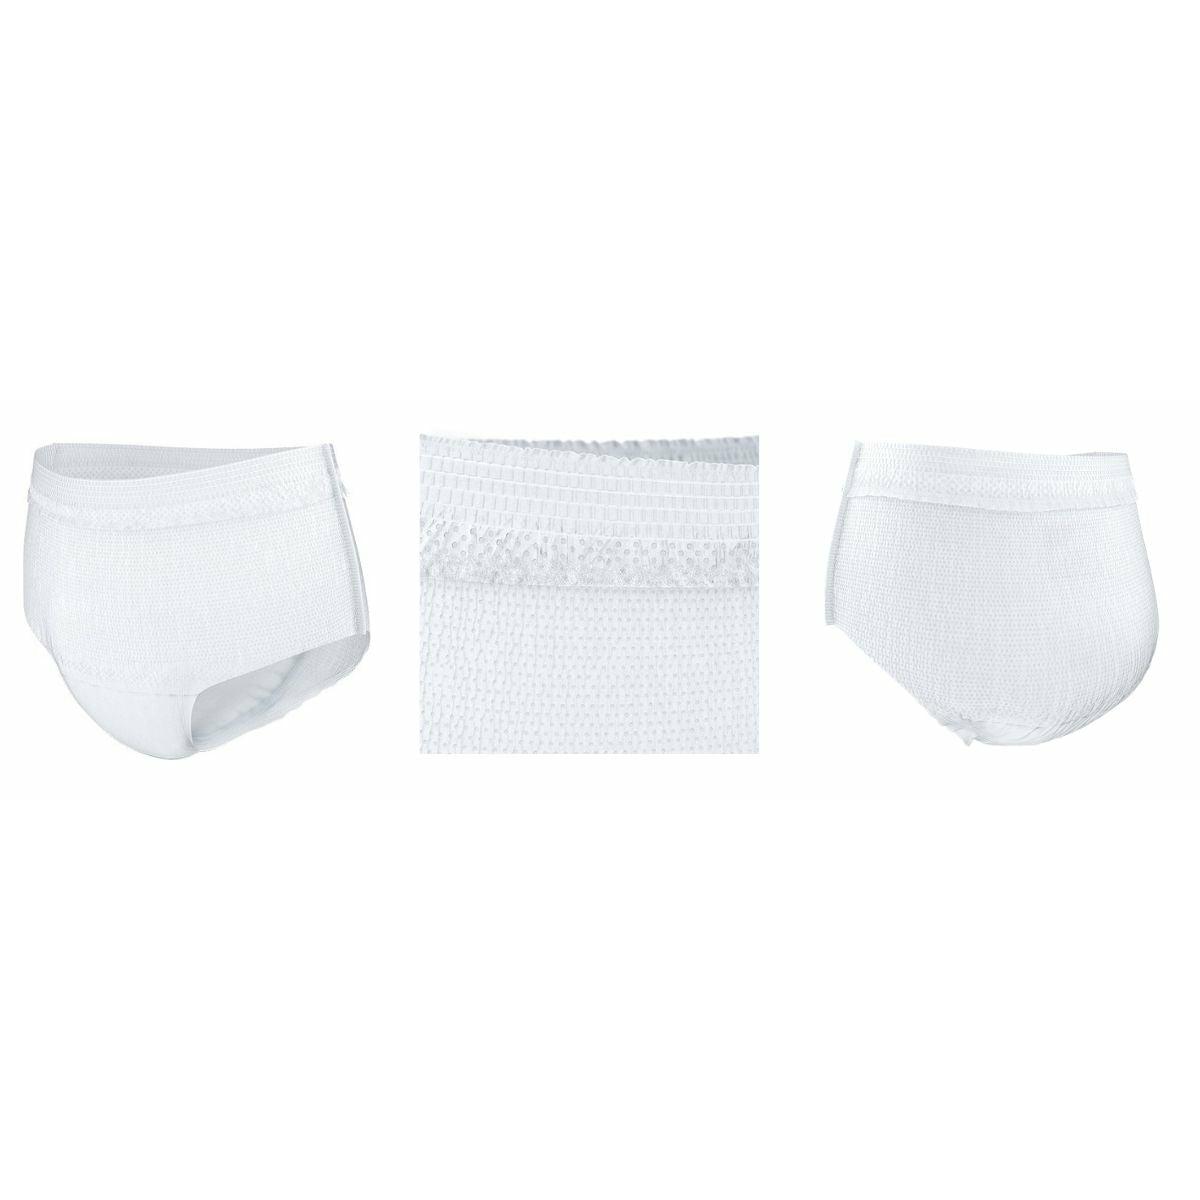 TENA® Women™ Protective Underwear Super Plus Absorbency - Bowers